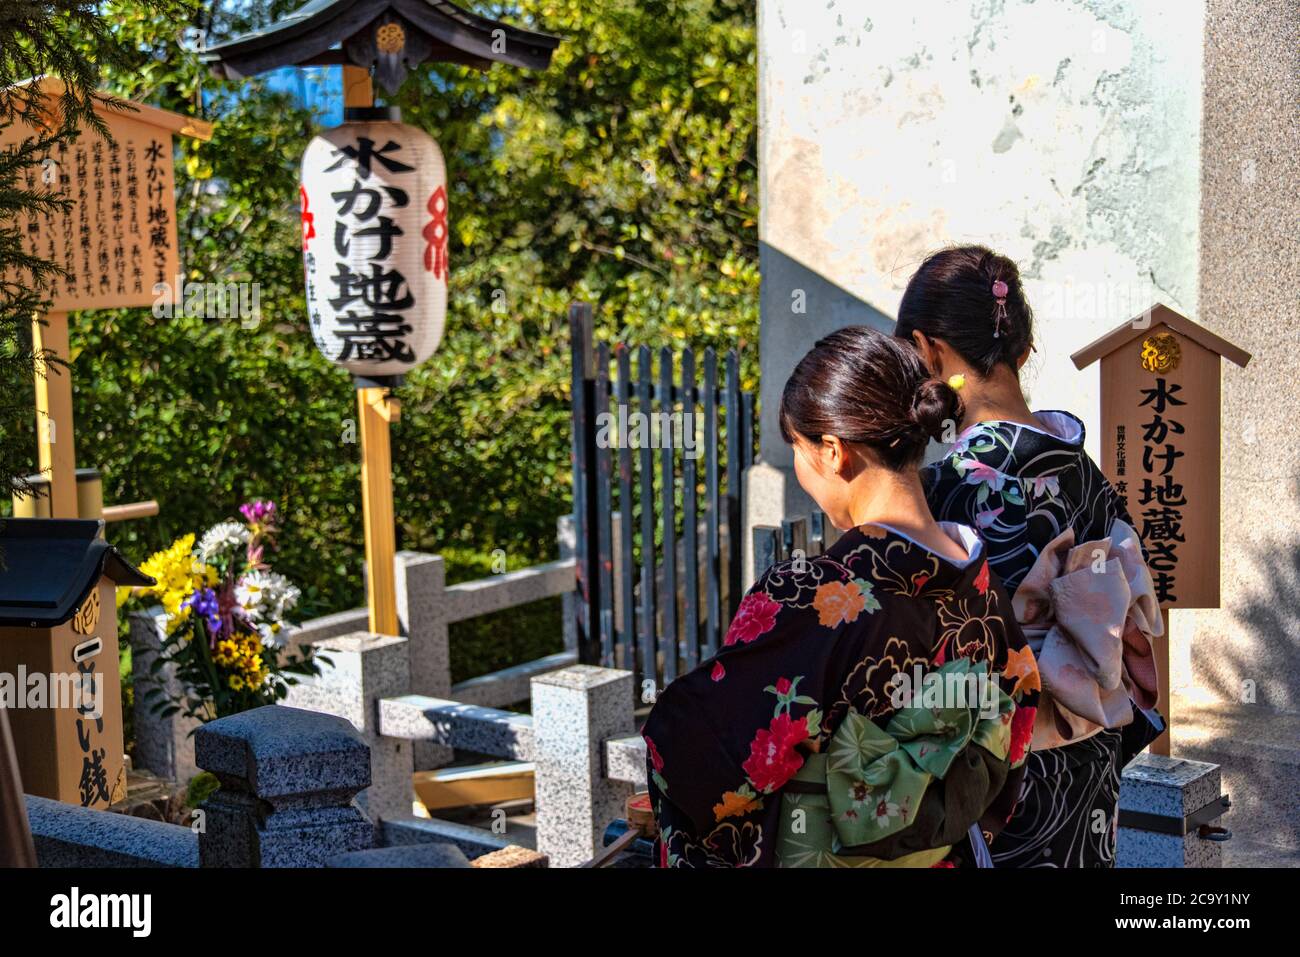 Two yong women praying at temple deities statues, Kiyomizu-dera temple, Kyoto, Japan Stock Photo